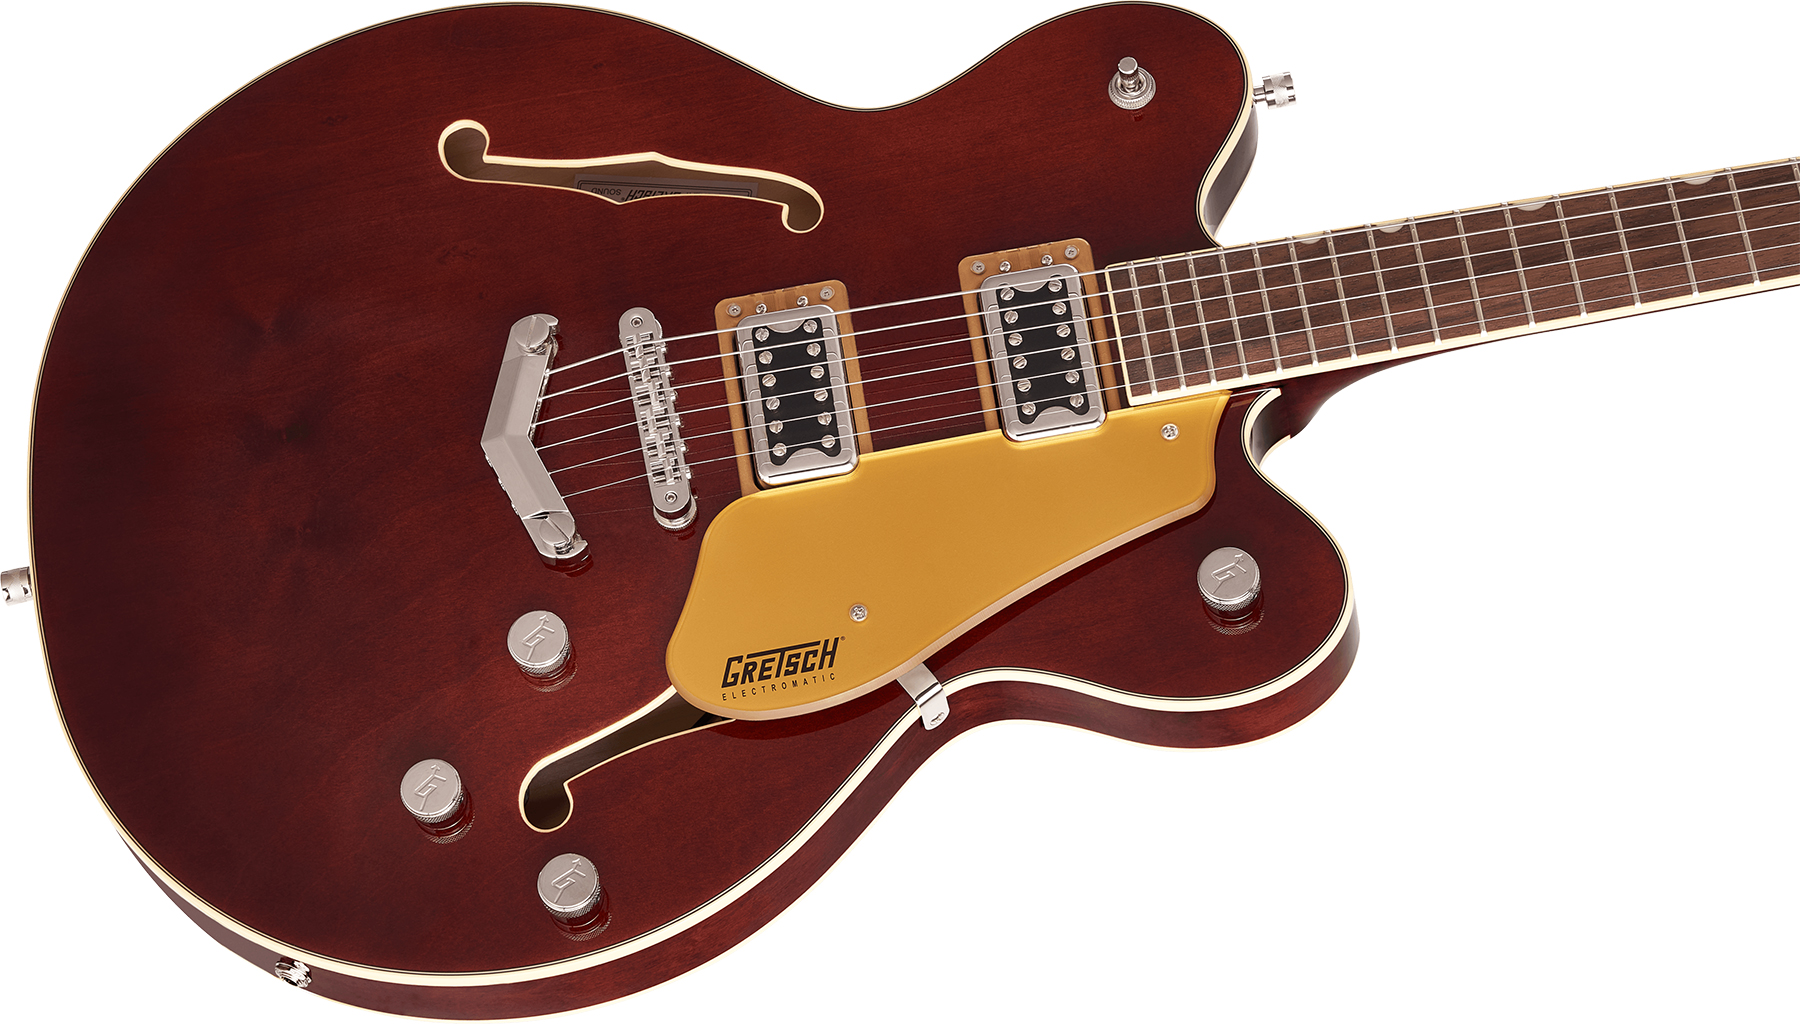 Gretsch G5622 Center Bloc Double Cut V-stoptail Electromatic Hh Ht Lau - Aged Walnut - Semi-Hollow E-Gitarre - Variation 2